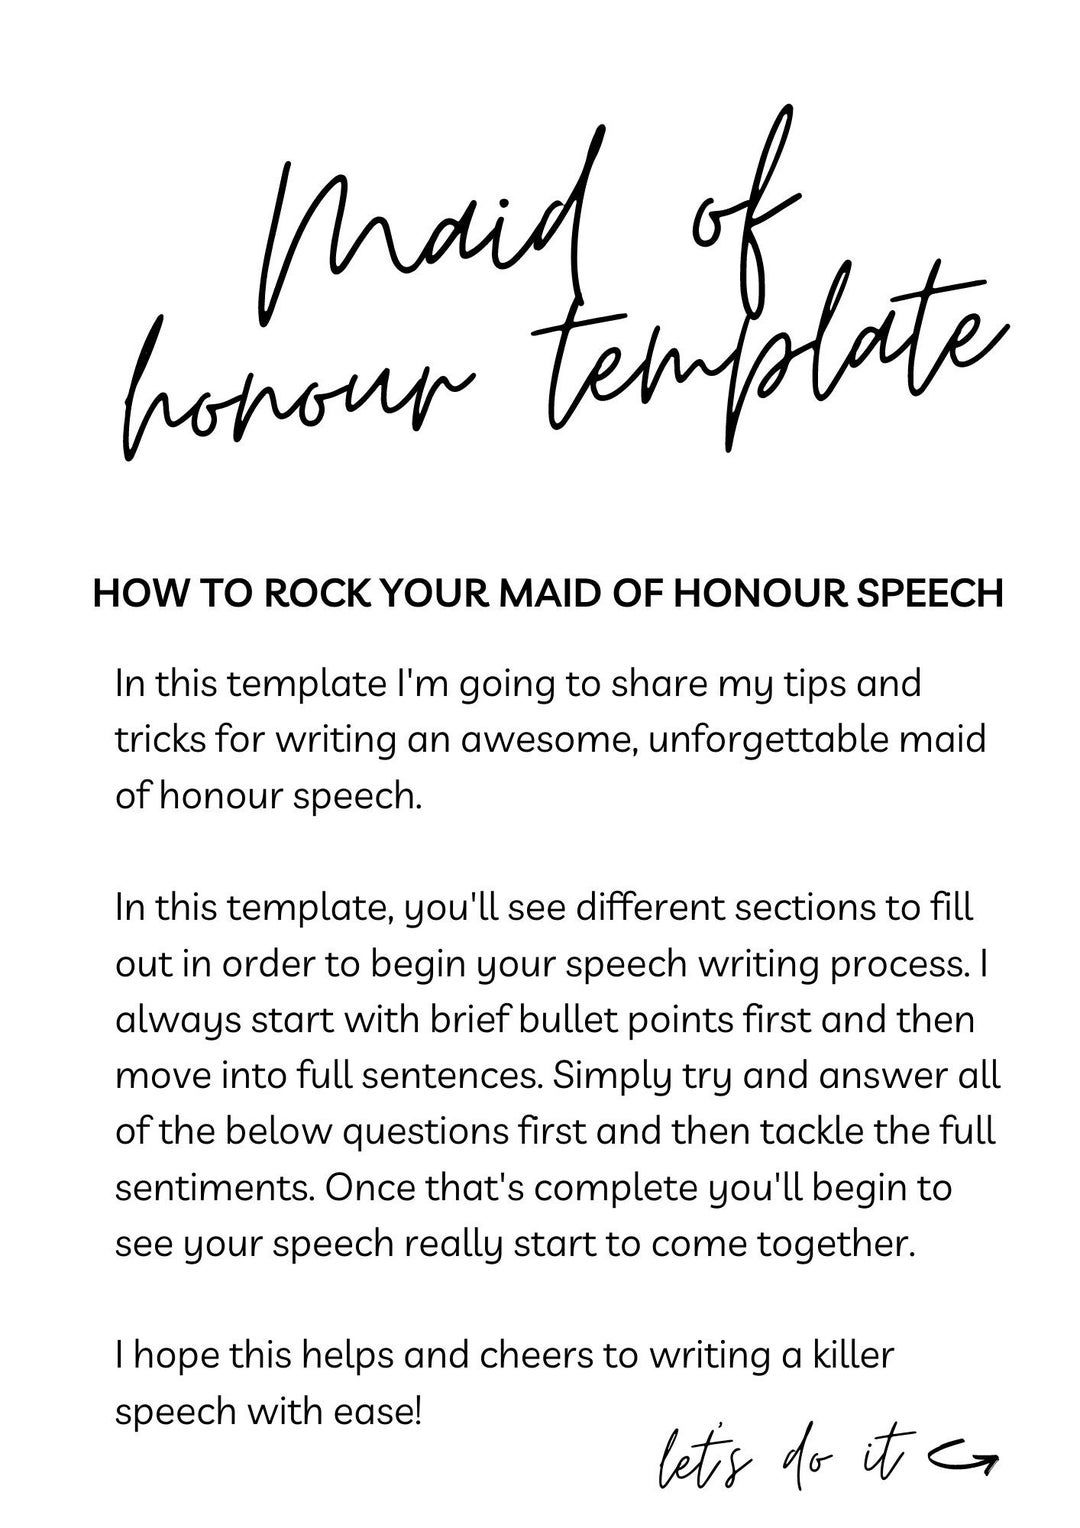 maid of honor speech written out